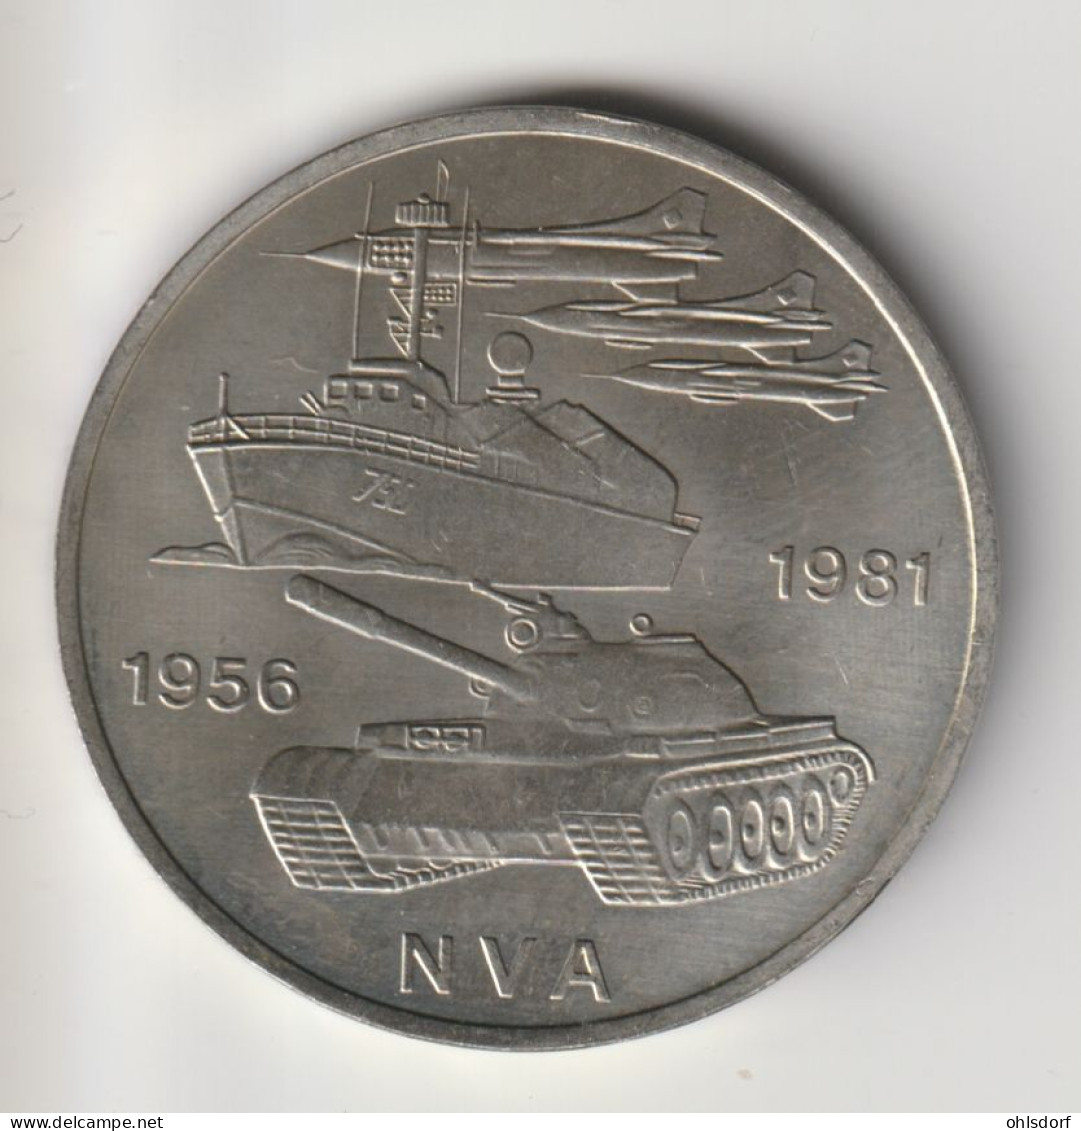 DDR 1981: 10 Mark, NVA, KM 80 - 10 Marcos